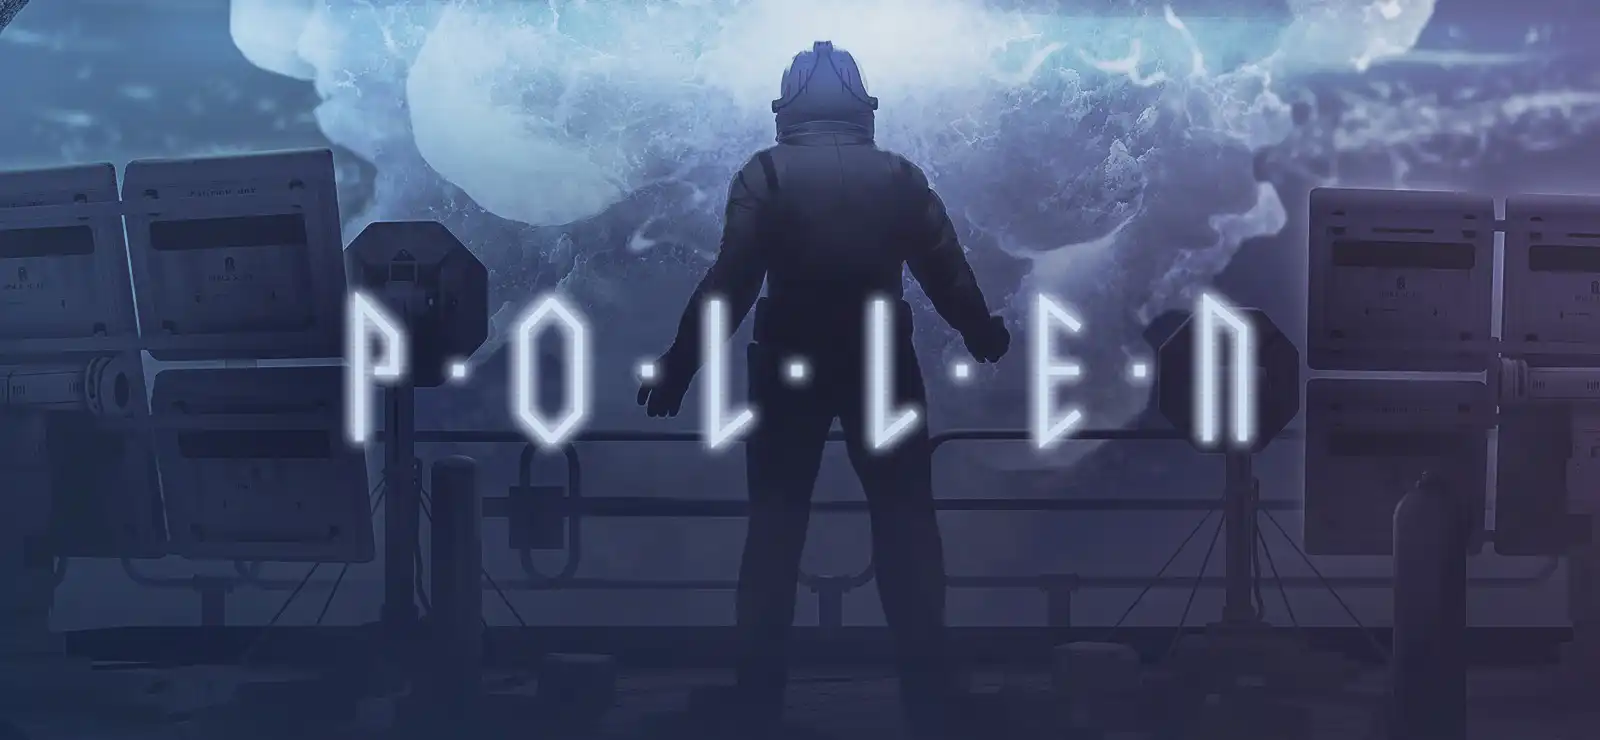 P.O.L.L.E.N. – путешествие к центру туда